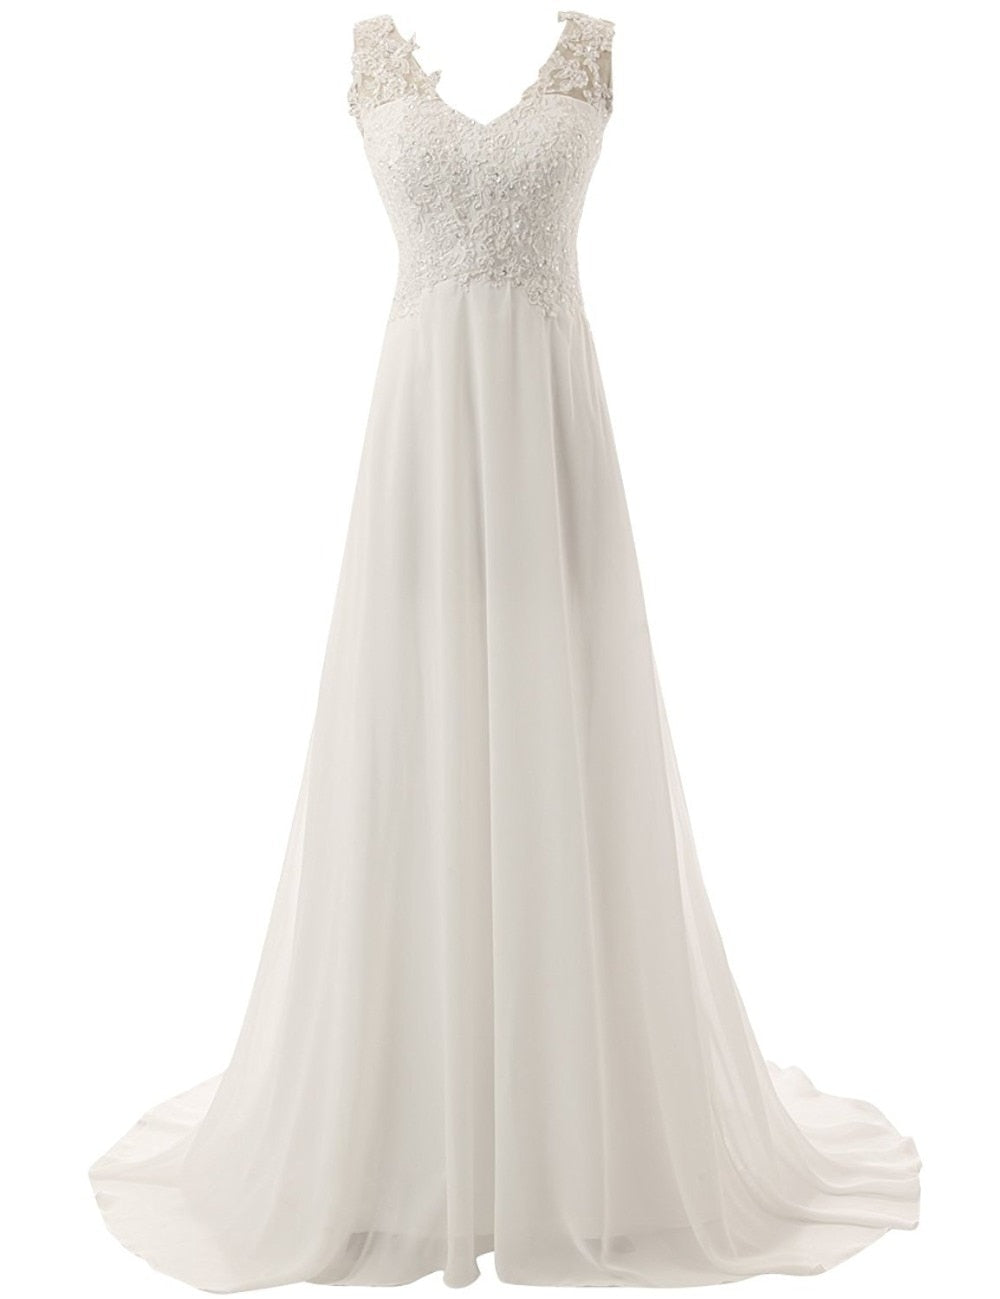 Beach Wedding Dresses White/Lvory Chiffon Lace Appliques Bridal Gown Backless Vestido De Noiva